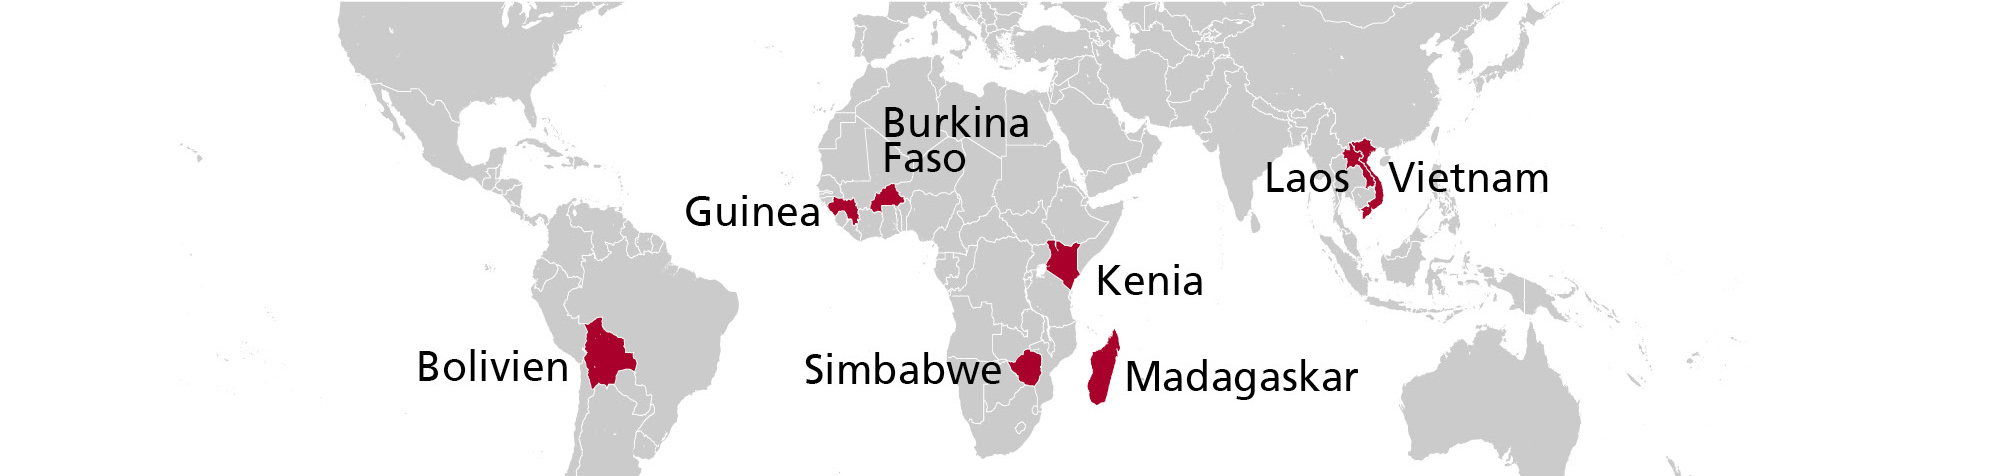 Wo die CBM augenmedizinisch hilft: Bolivien, Burkina Faso, Guinea, Kenia, Madagaskar, Simbabwe, Laos, Vietnam.